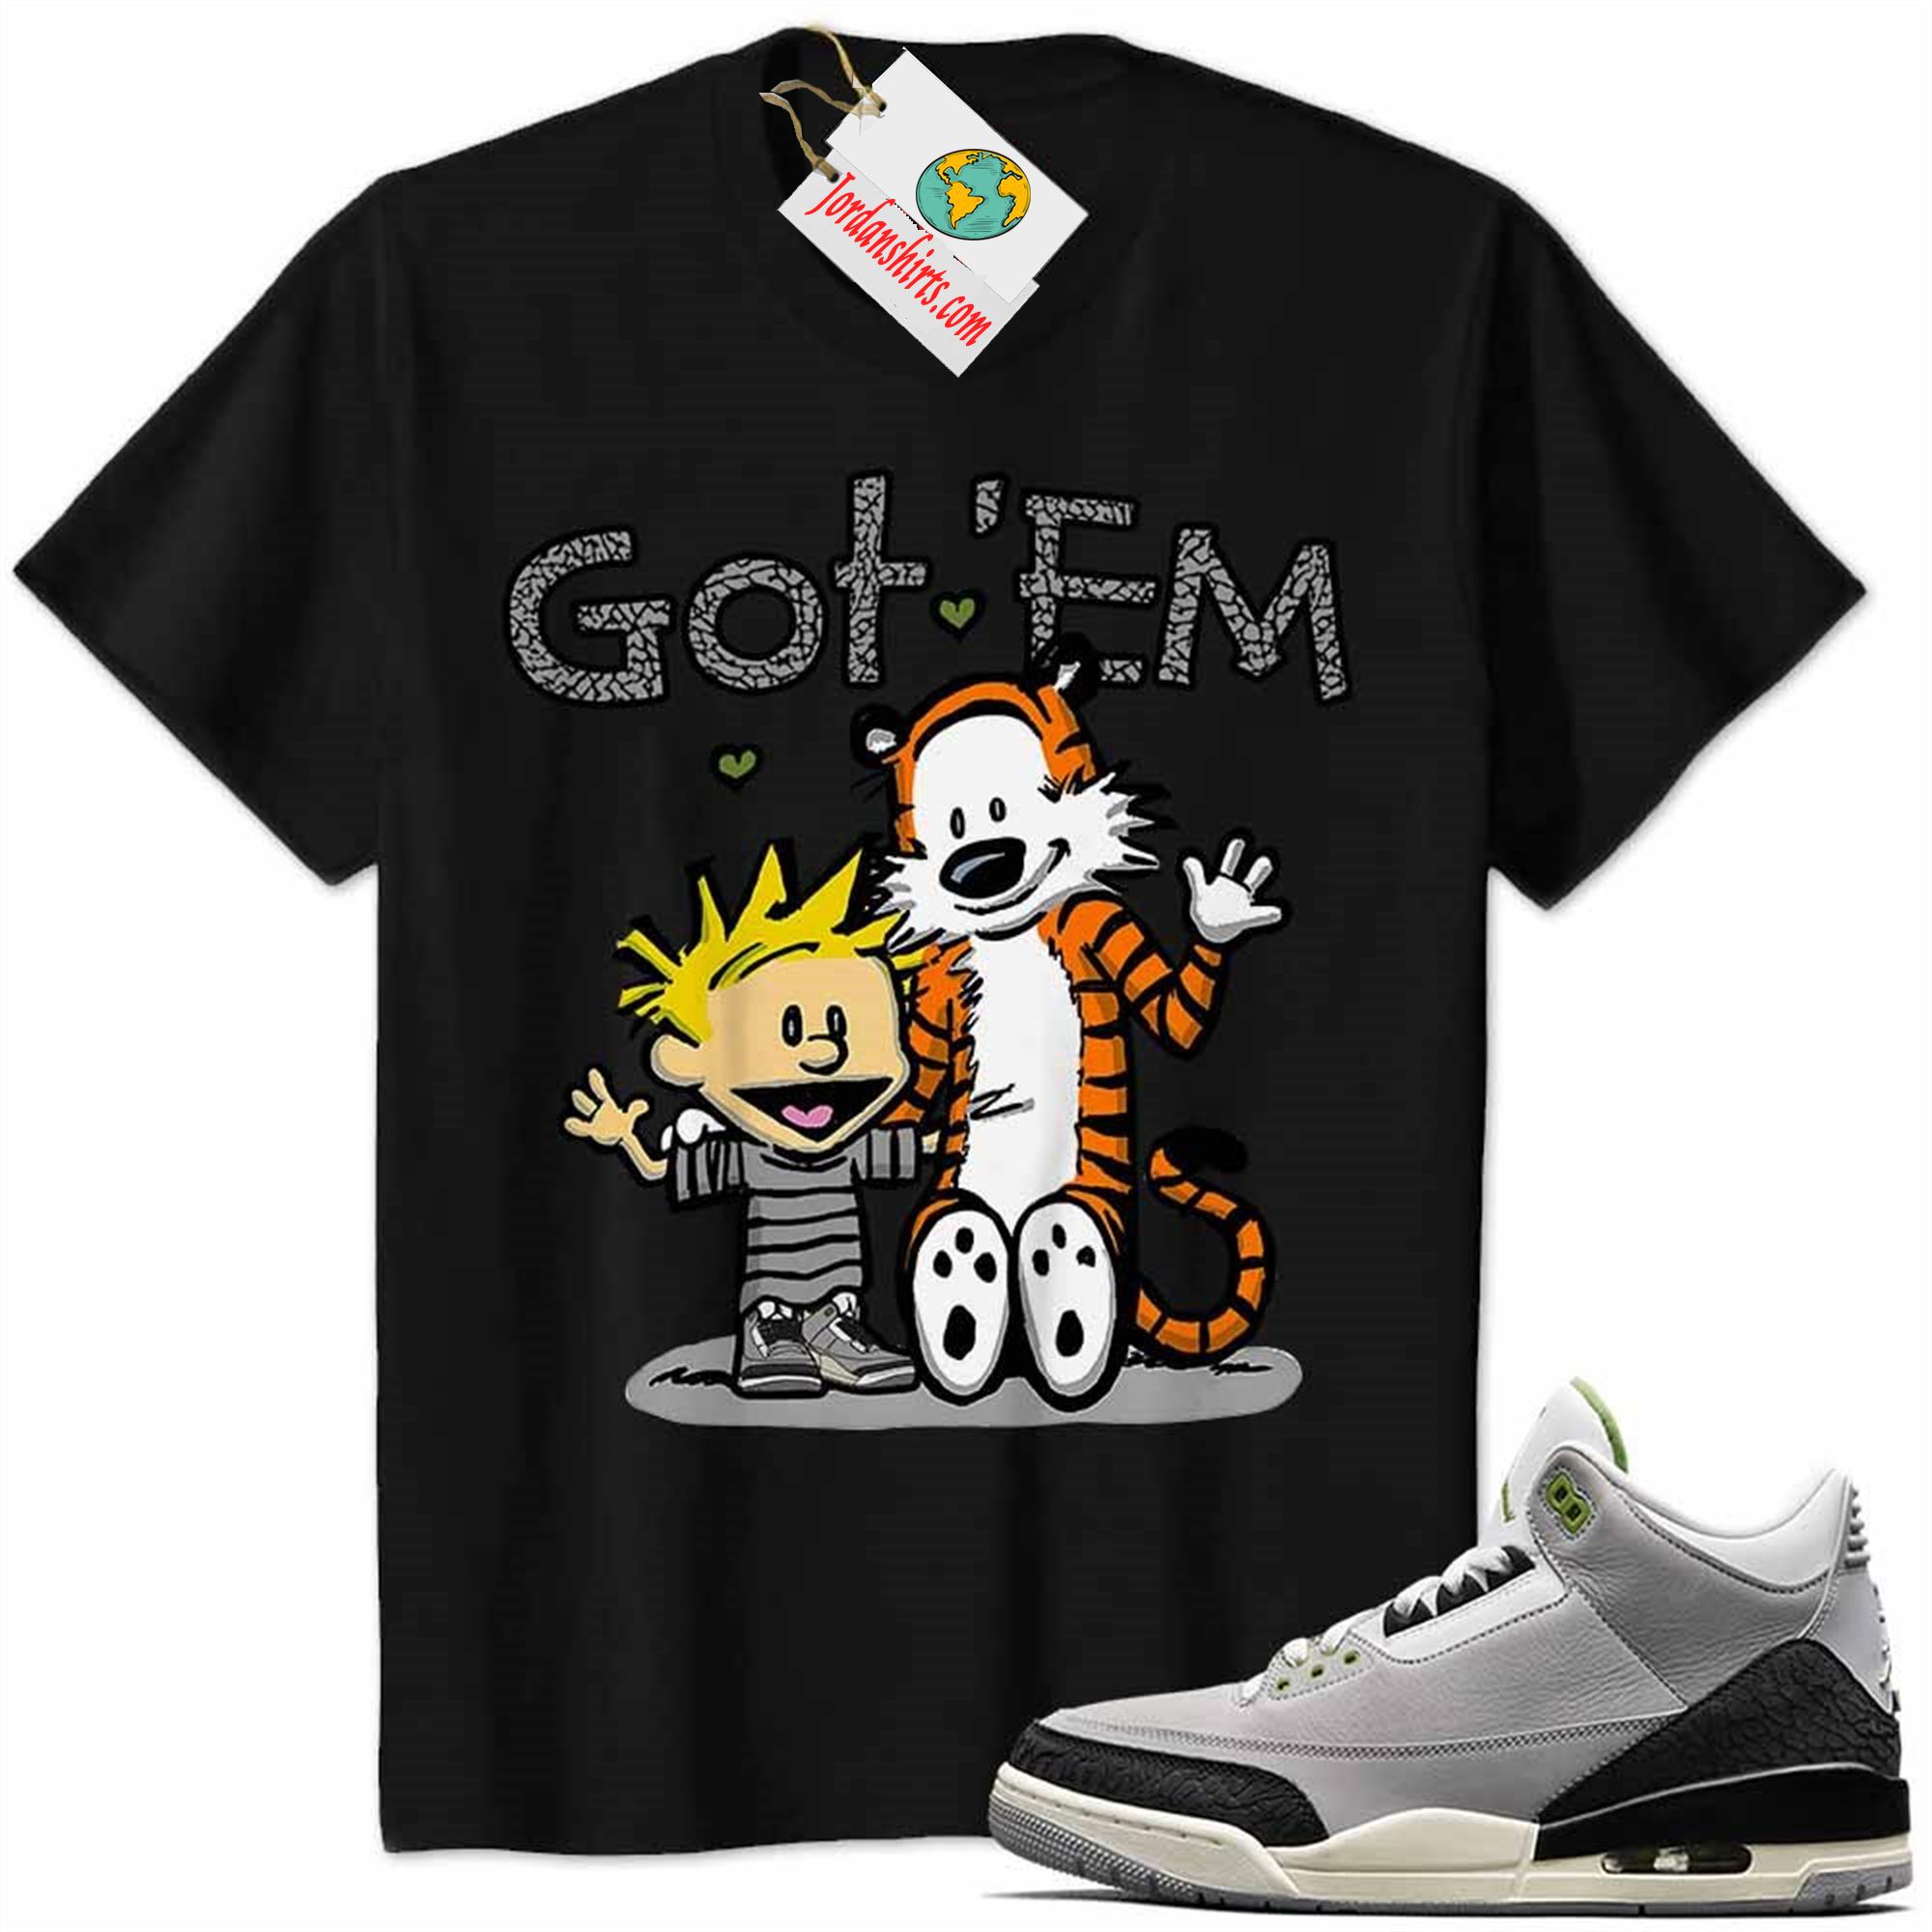 Jordan 3 Shirt, Jordan 3 Chlorophyll Shirt Calvin And Hobbes Got Em Black Full Size Up To 5xl